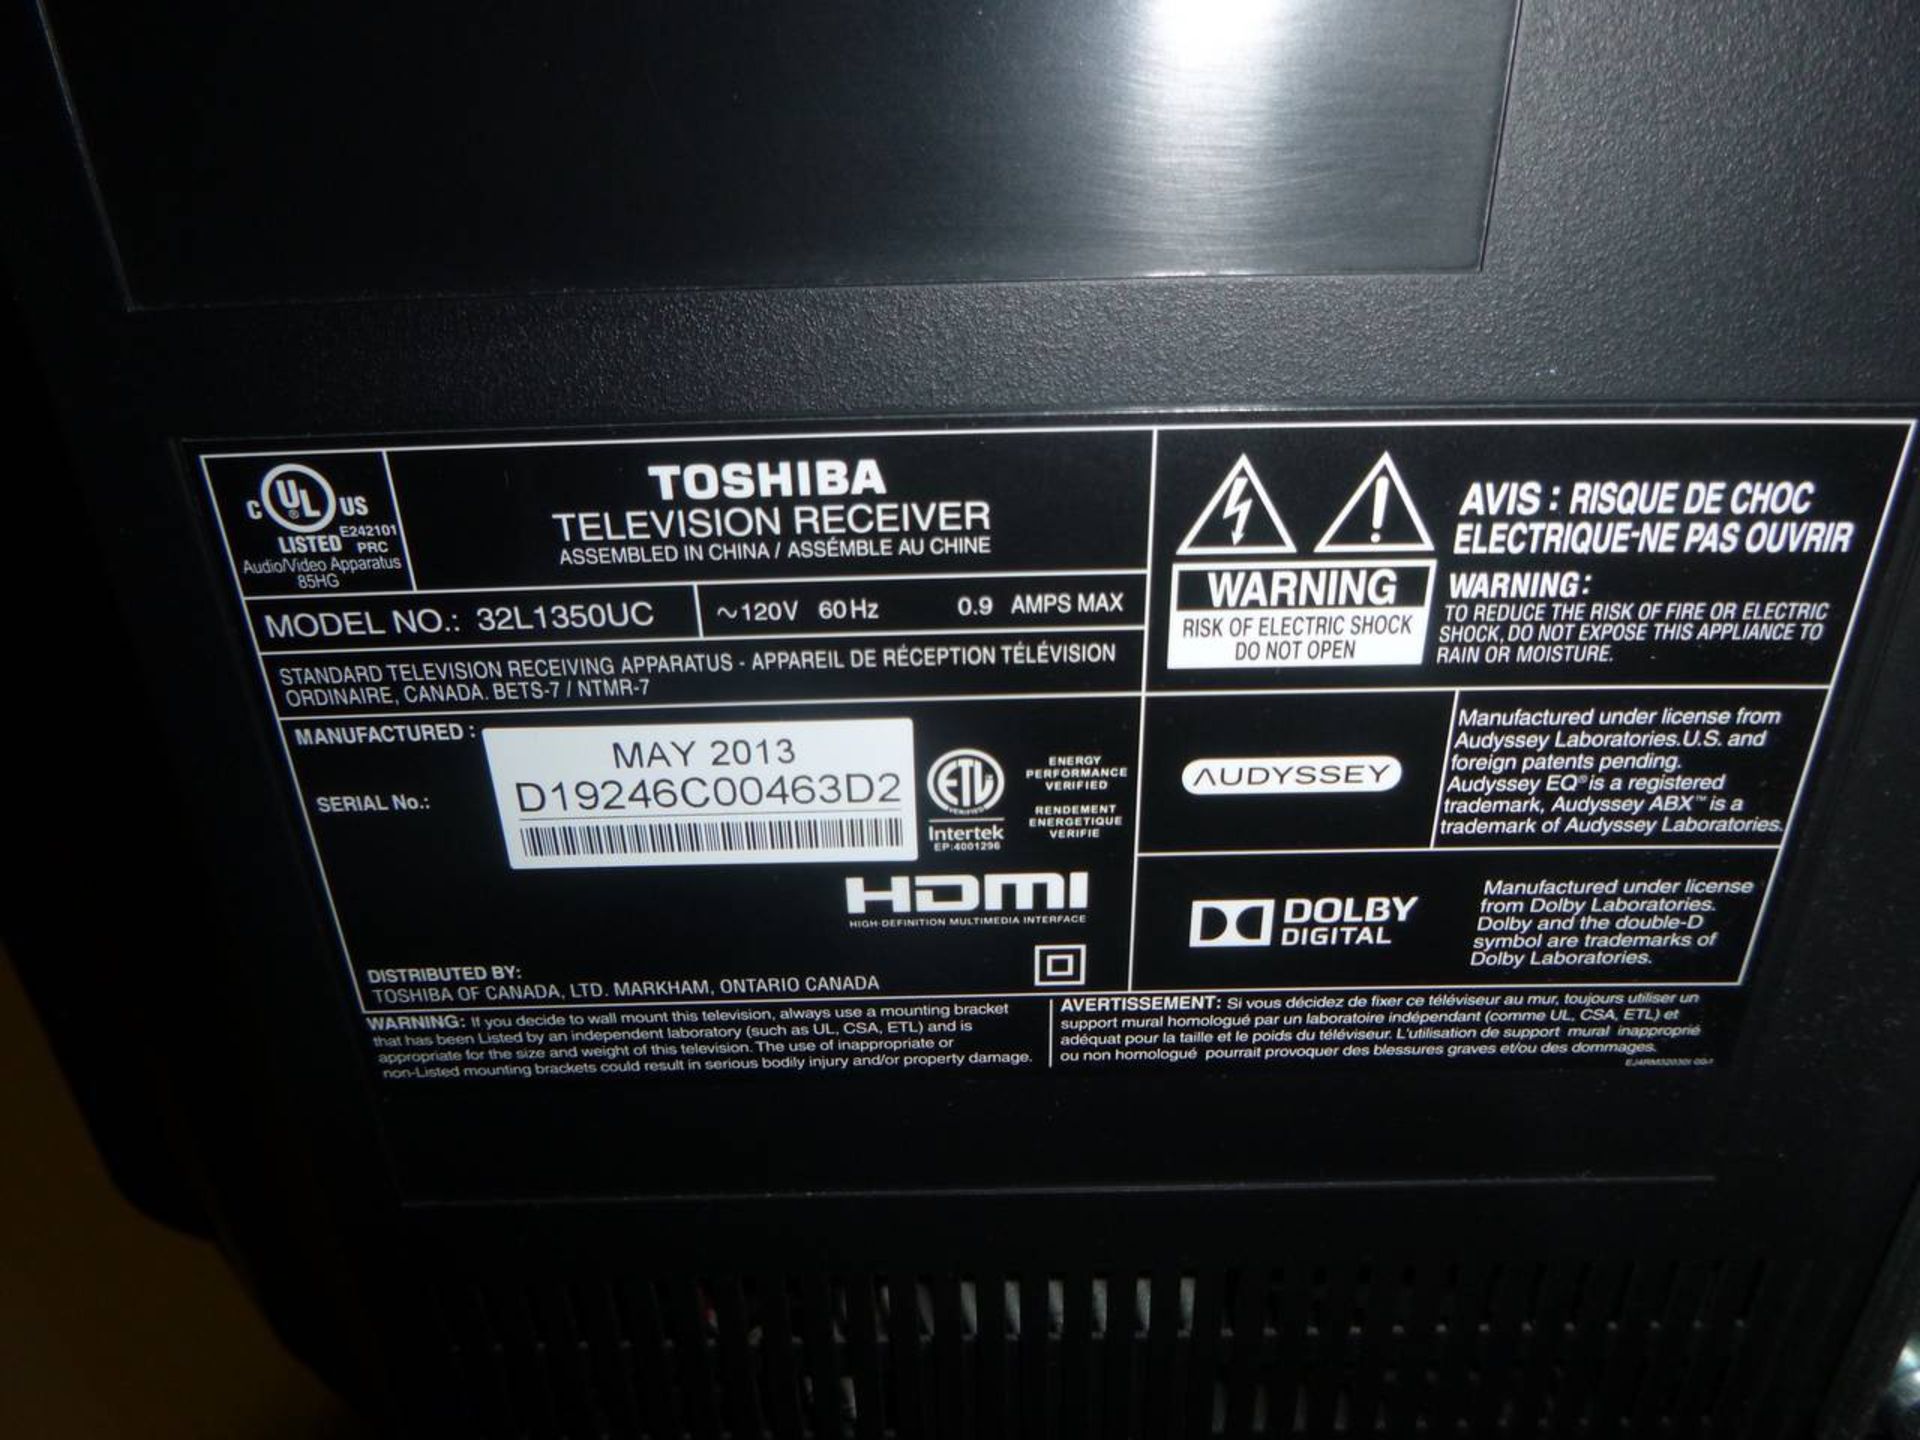 Toshiba Mod 32L1350UC flat screen tv - Image 2 of 3